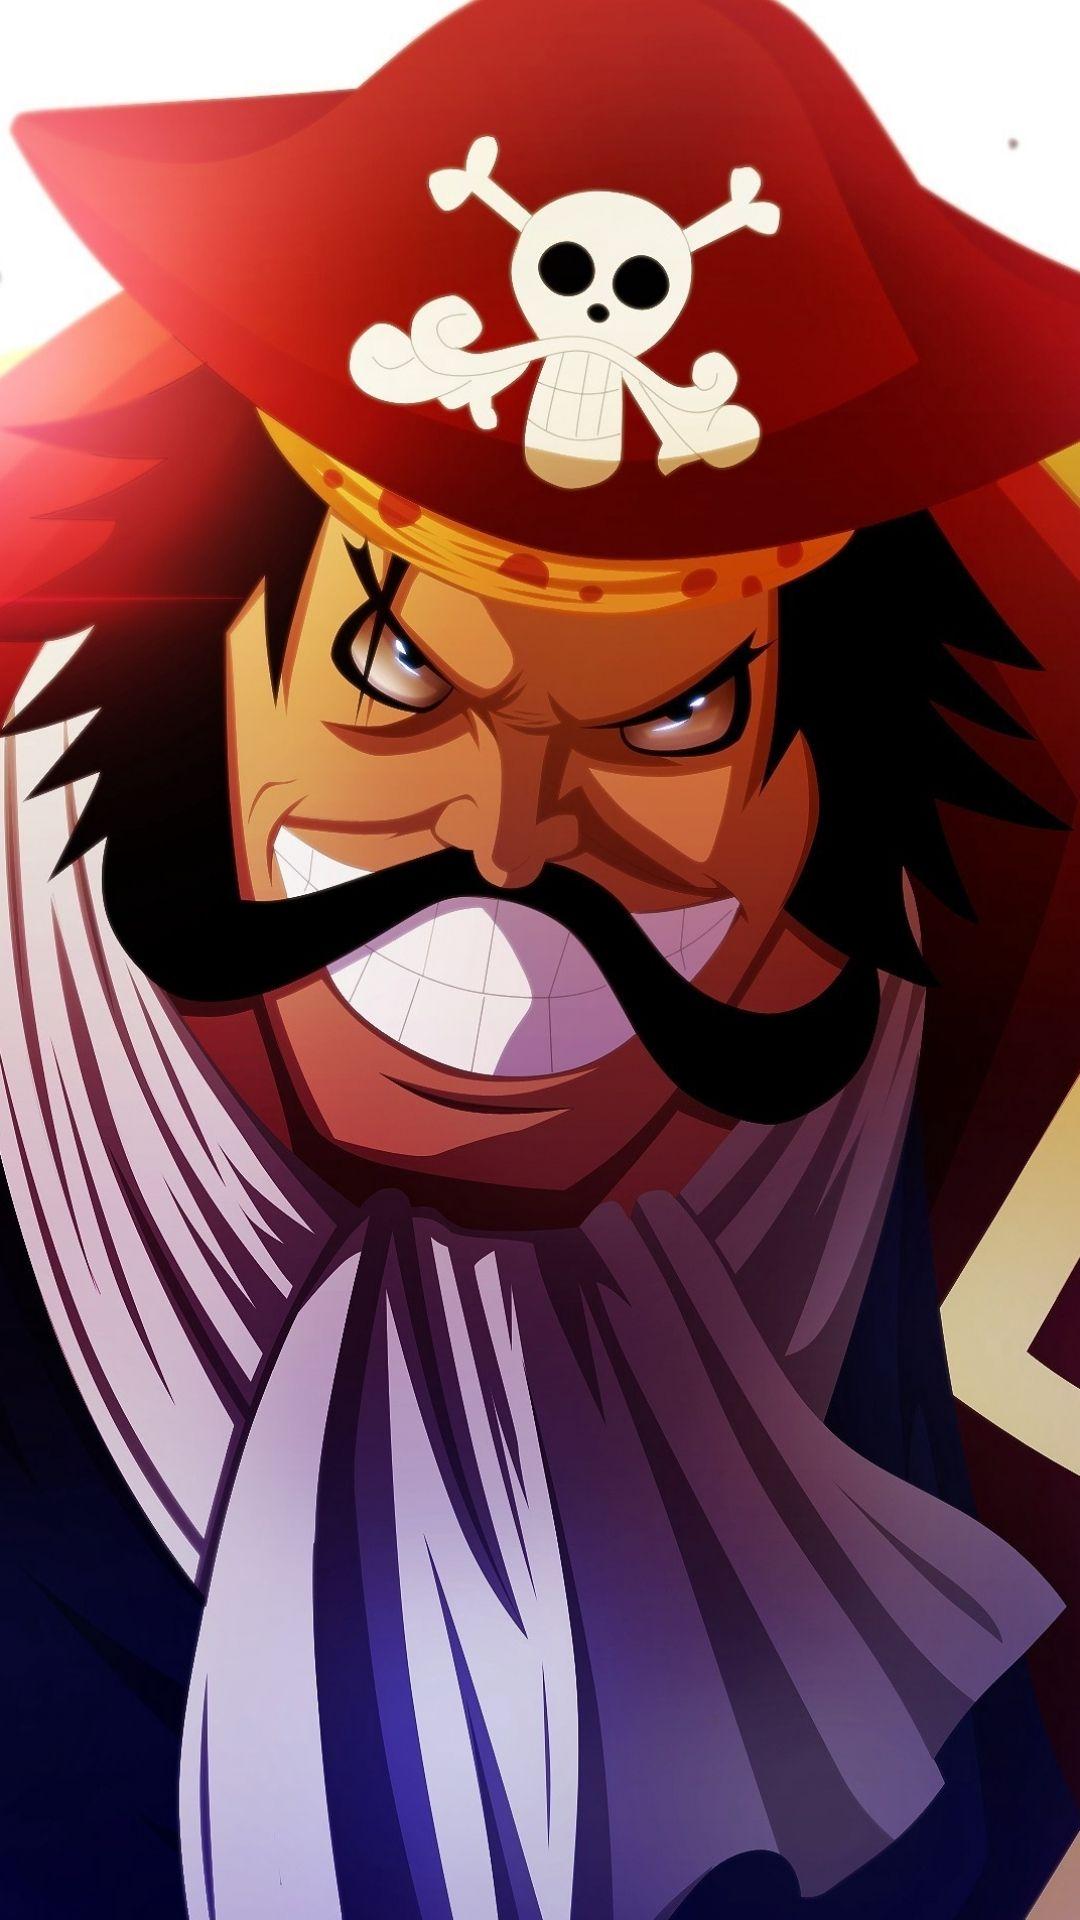 Download Gambar Wallpaper Iphone Anime One Piece terbaru 2020